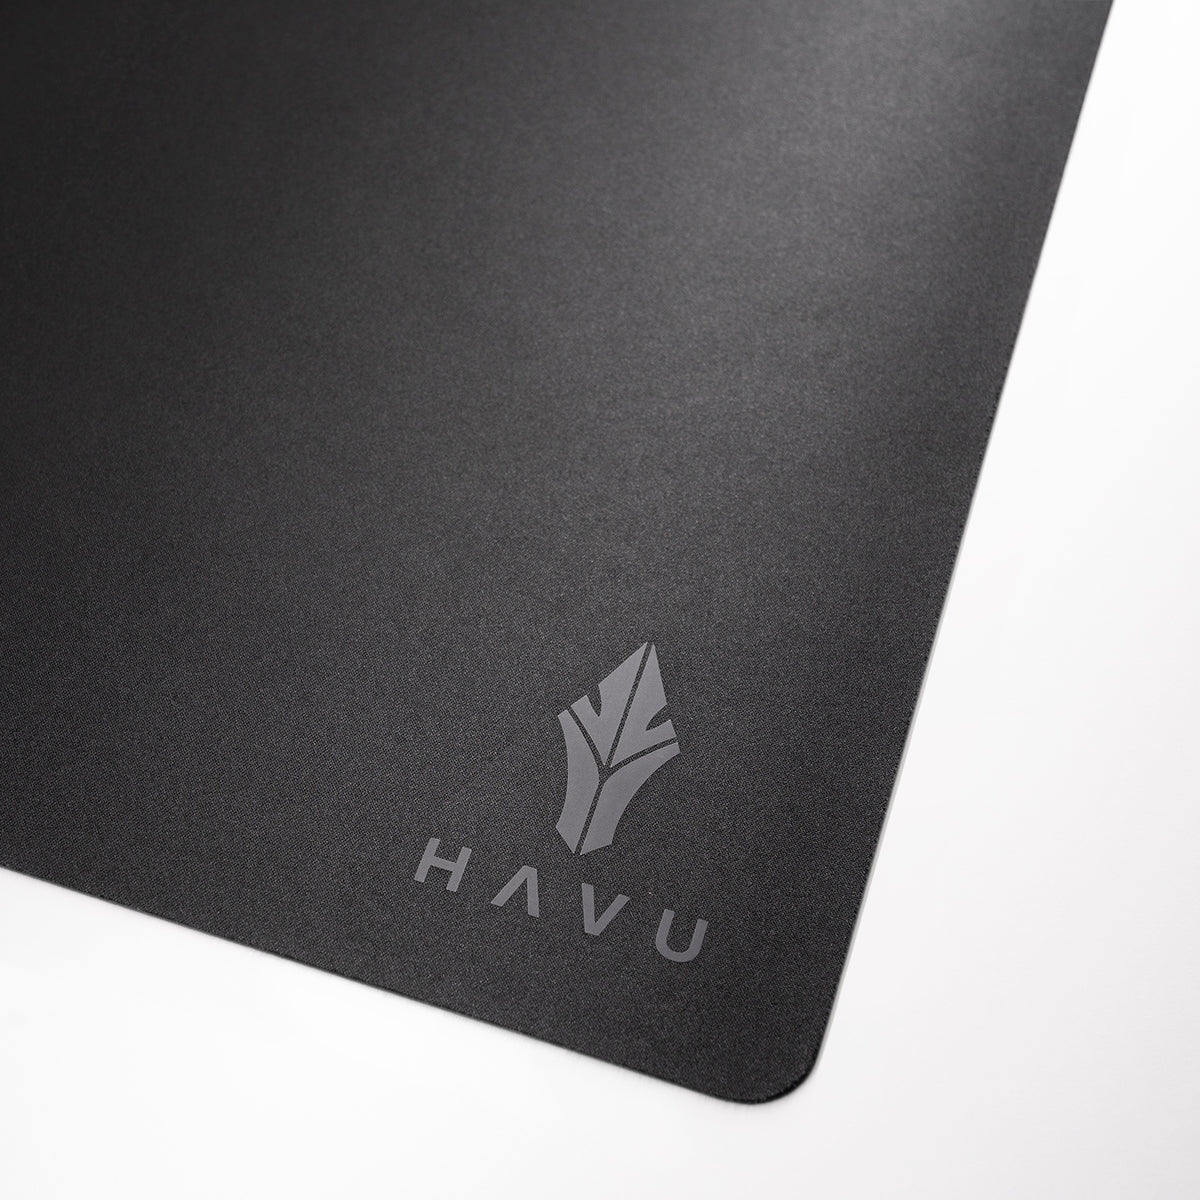 HAVU Mousepad - DARK - 450X400